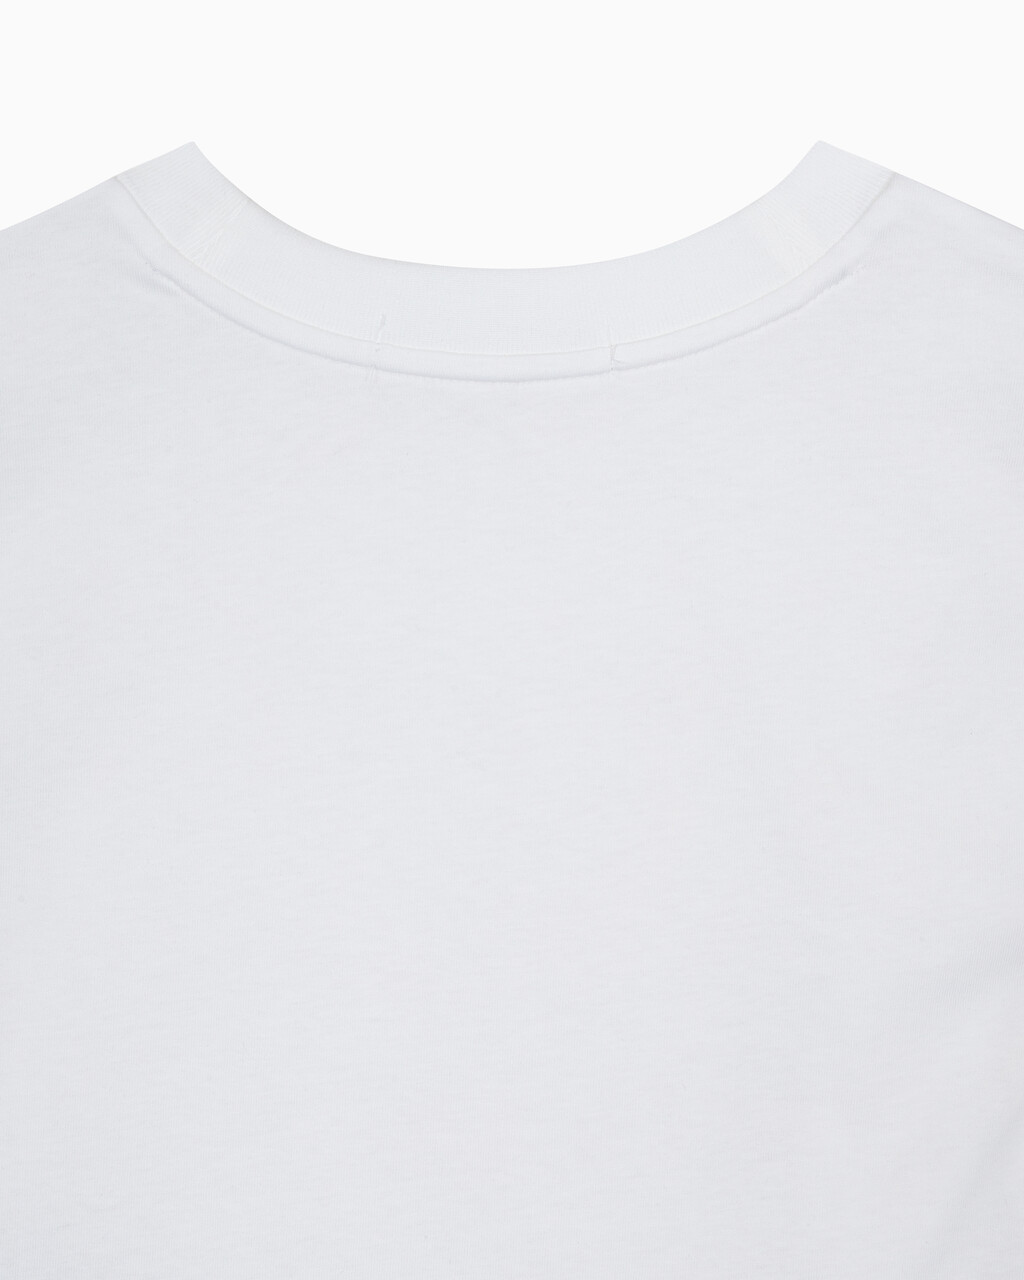 Buy 여성 레귤러핏 크롭 로고 반팔 티셔츠 in color BRIGHT WHITE